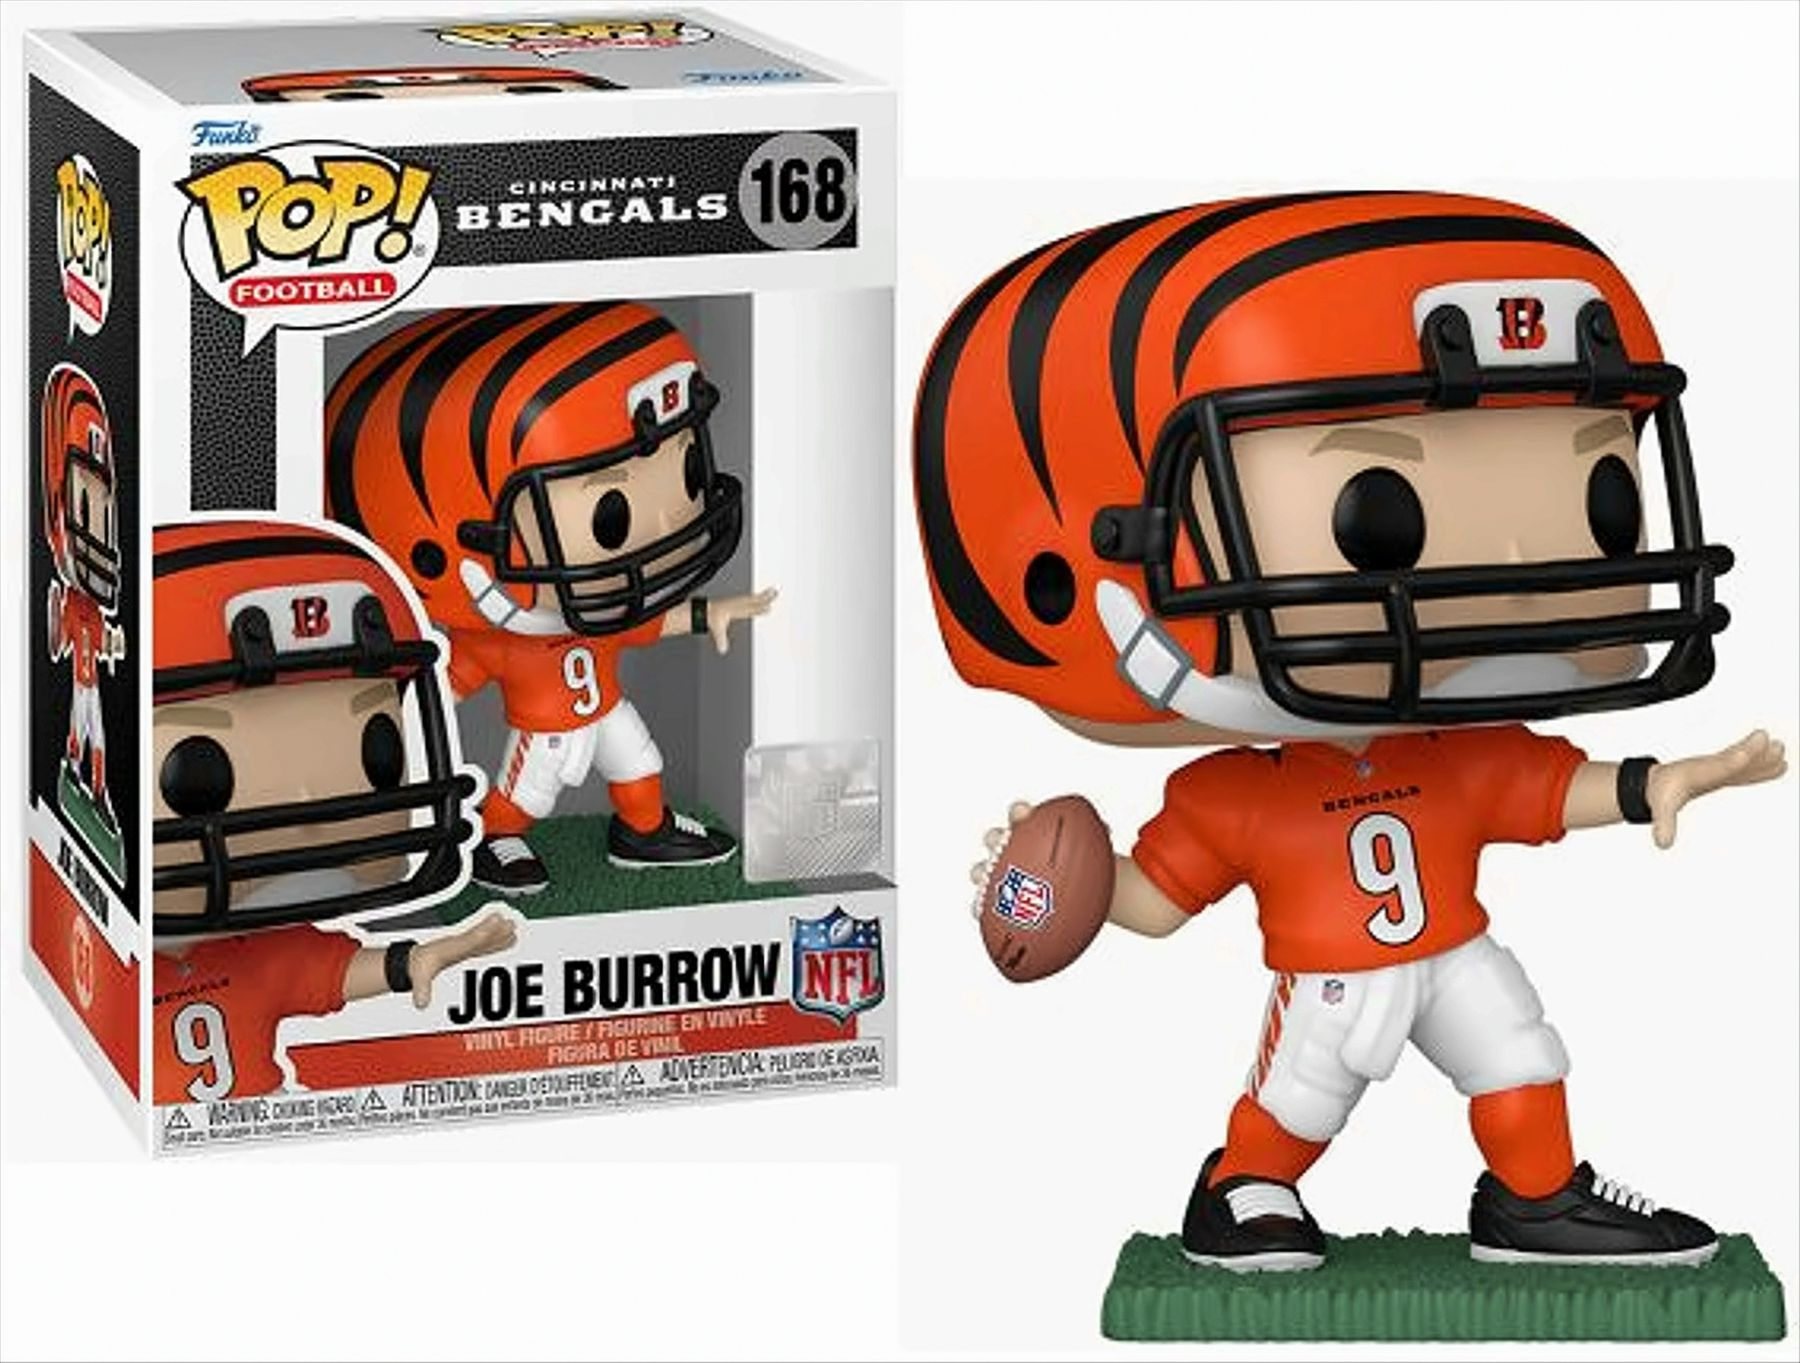 Bengals - Burrow Joe Cincinnati POP NFL - /